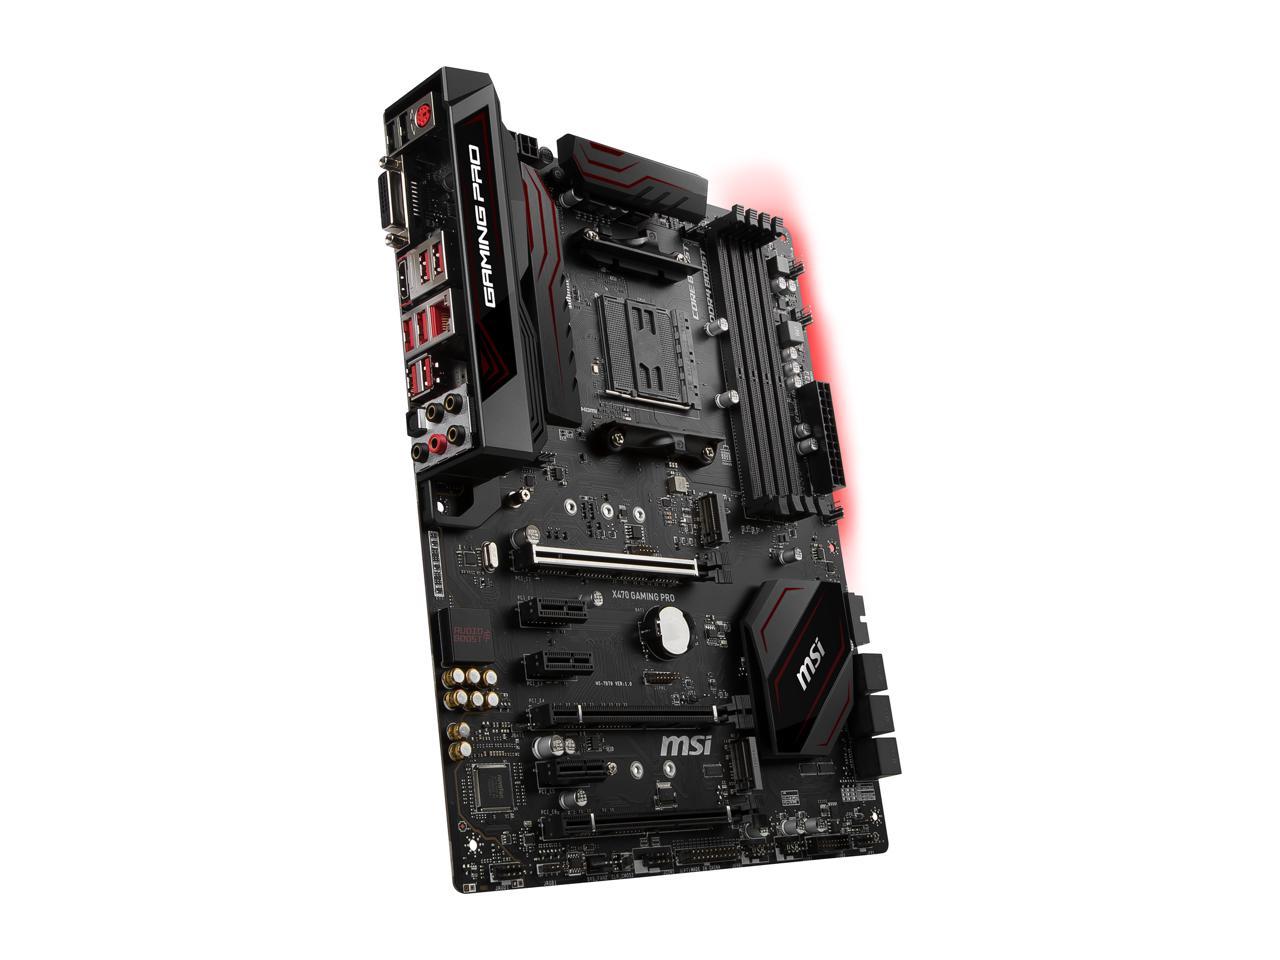 MSI X470 GAMING PRO AM4 ATX AMD Motherboard - Newegg.com